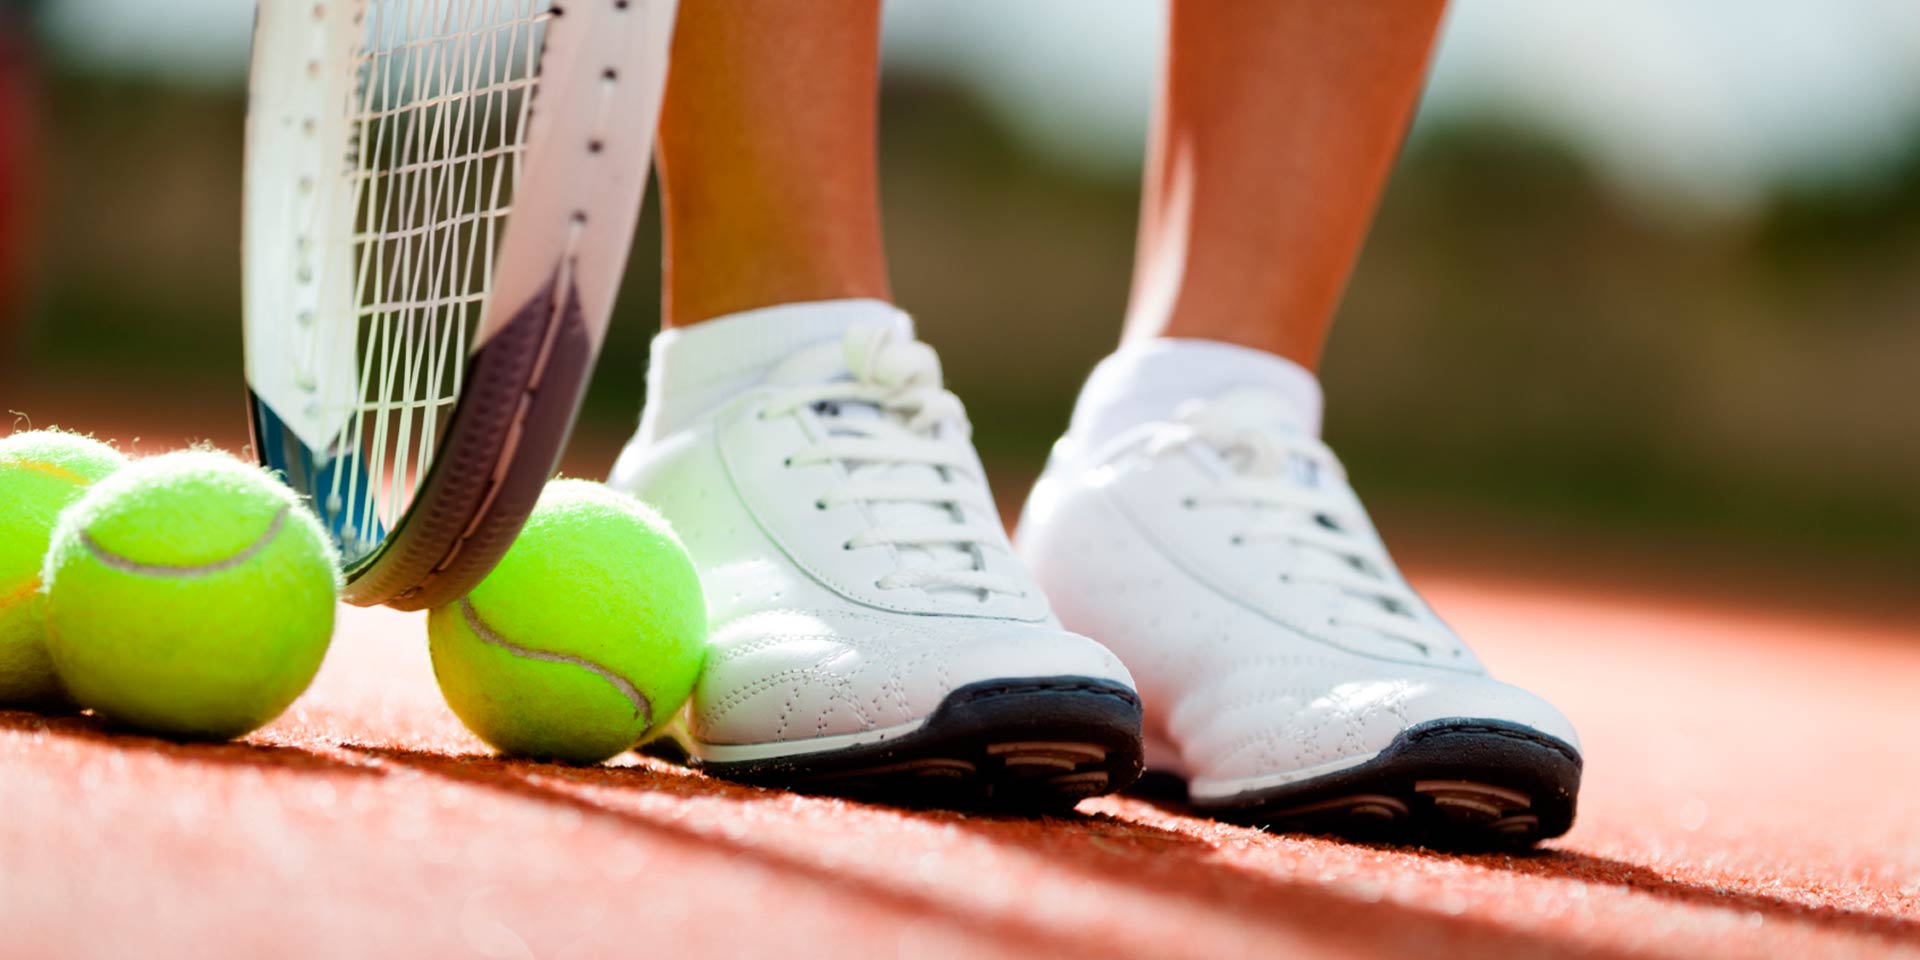 white tennis shoes